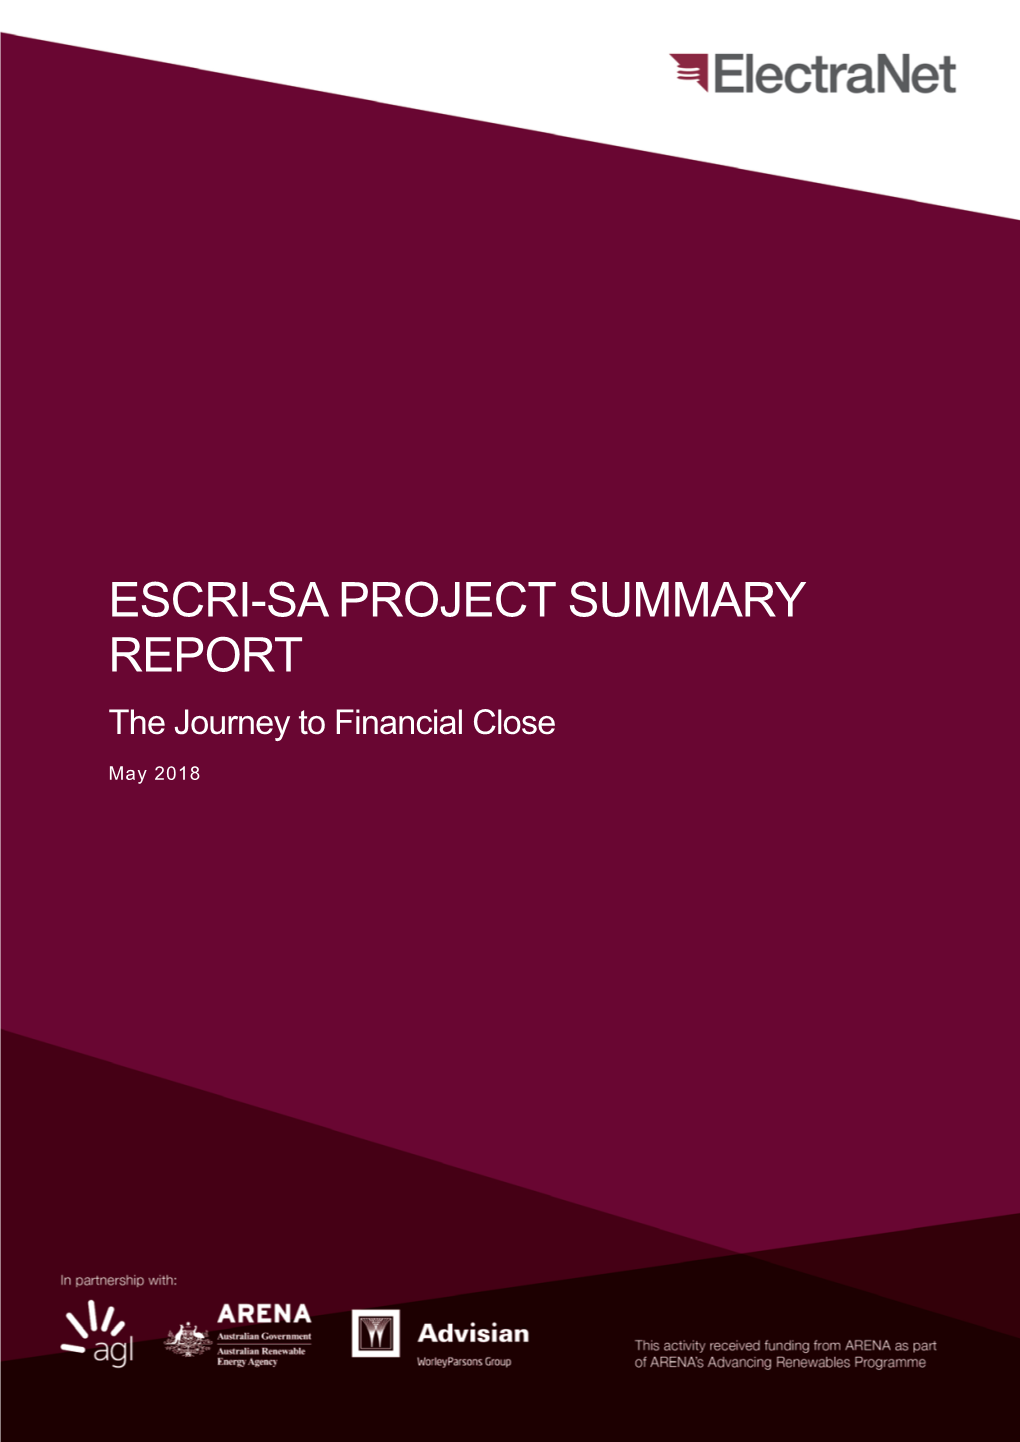 ESCRI-SA PROJECT SUMMARY REPORT the Journey to Financial Close